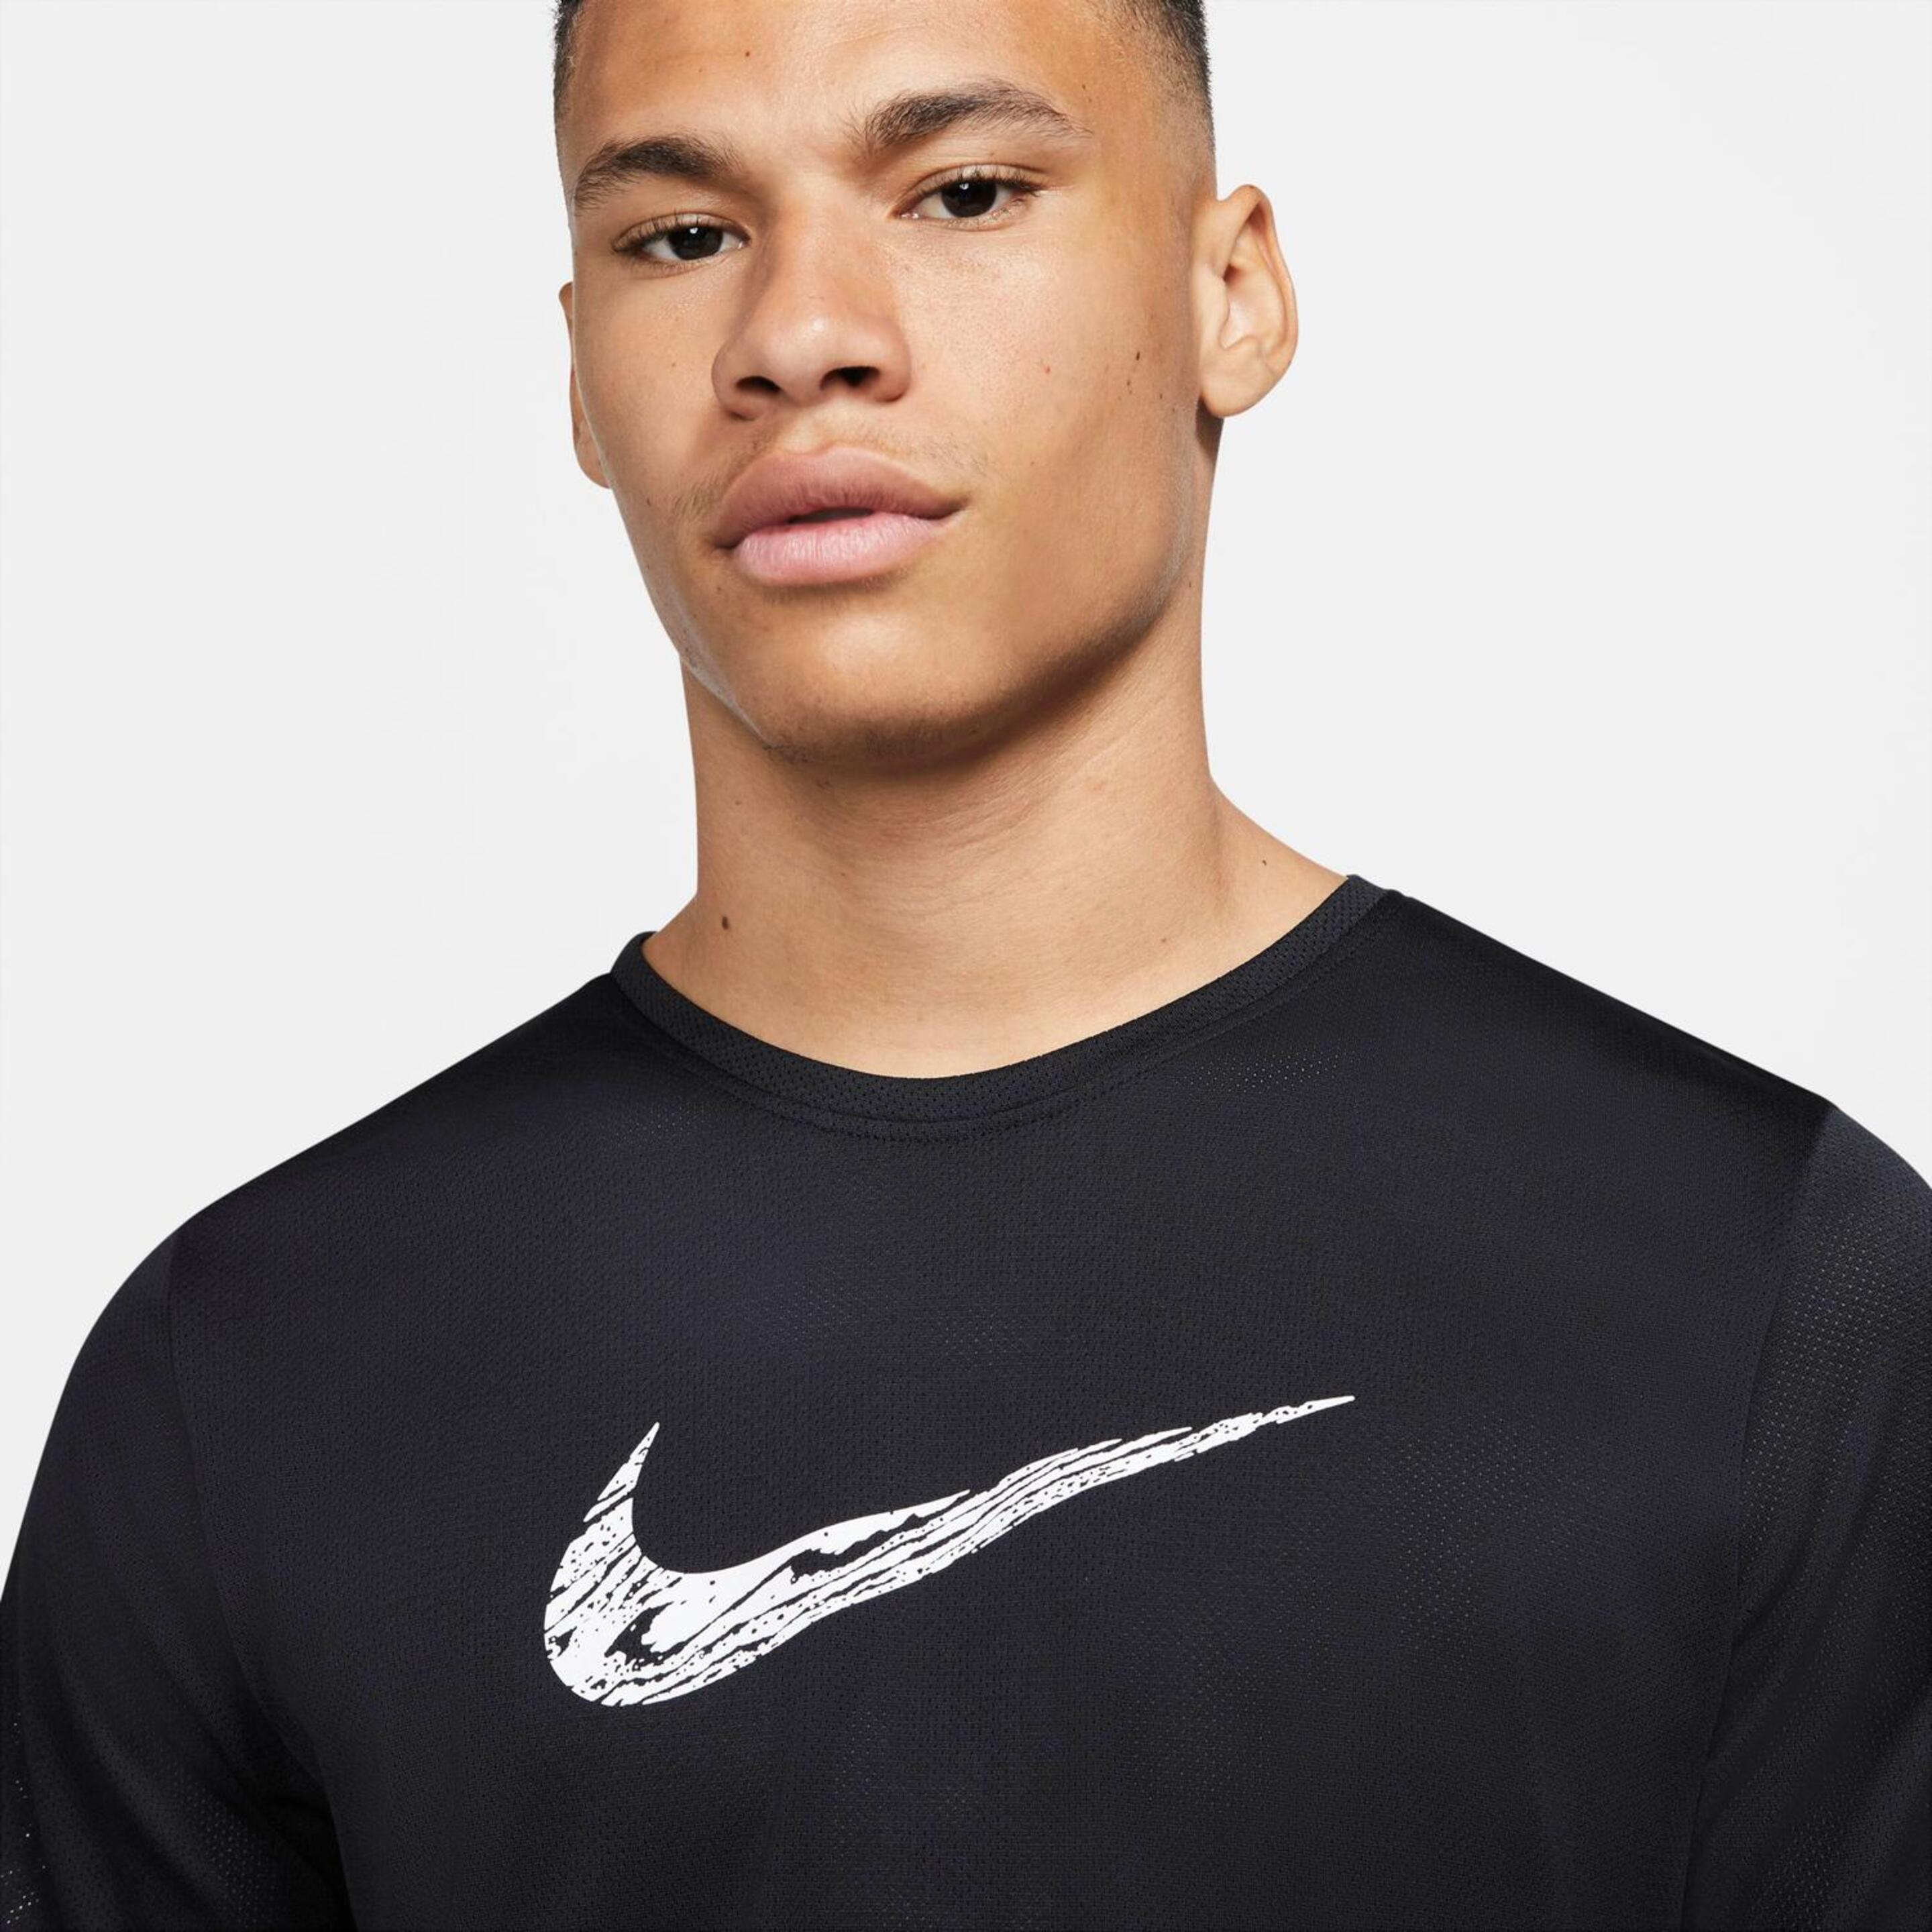 T-shirt Nike Breathe - Preto - T-shirt Running Homem